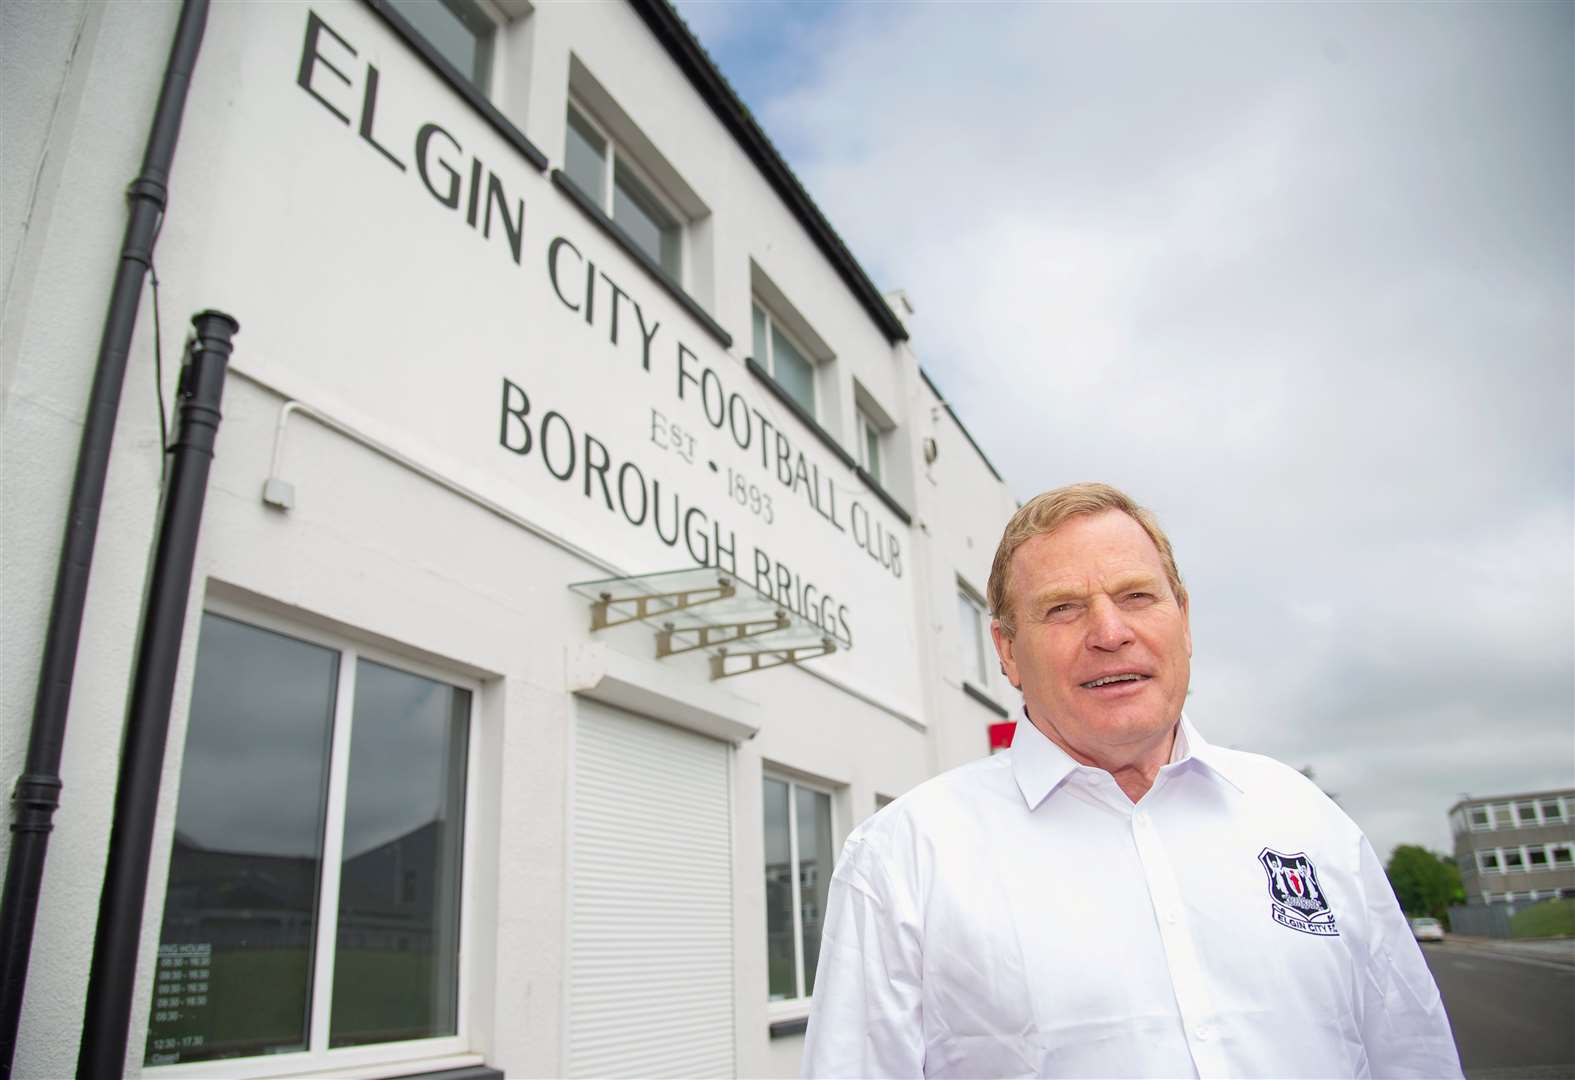 Elgin City Football Club chairman Graham Tatters...Picture: Daniel Forsyth..